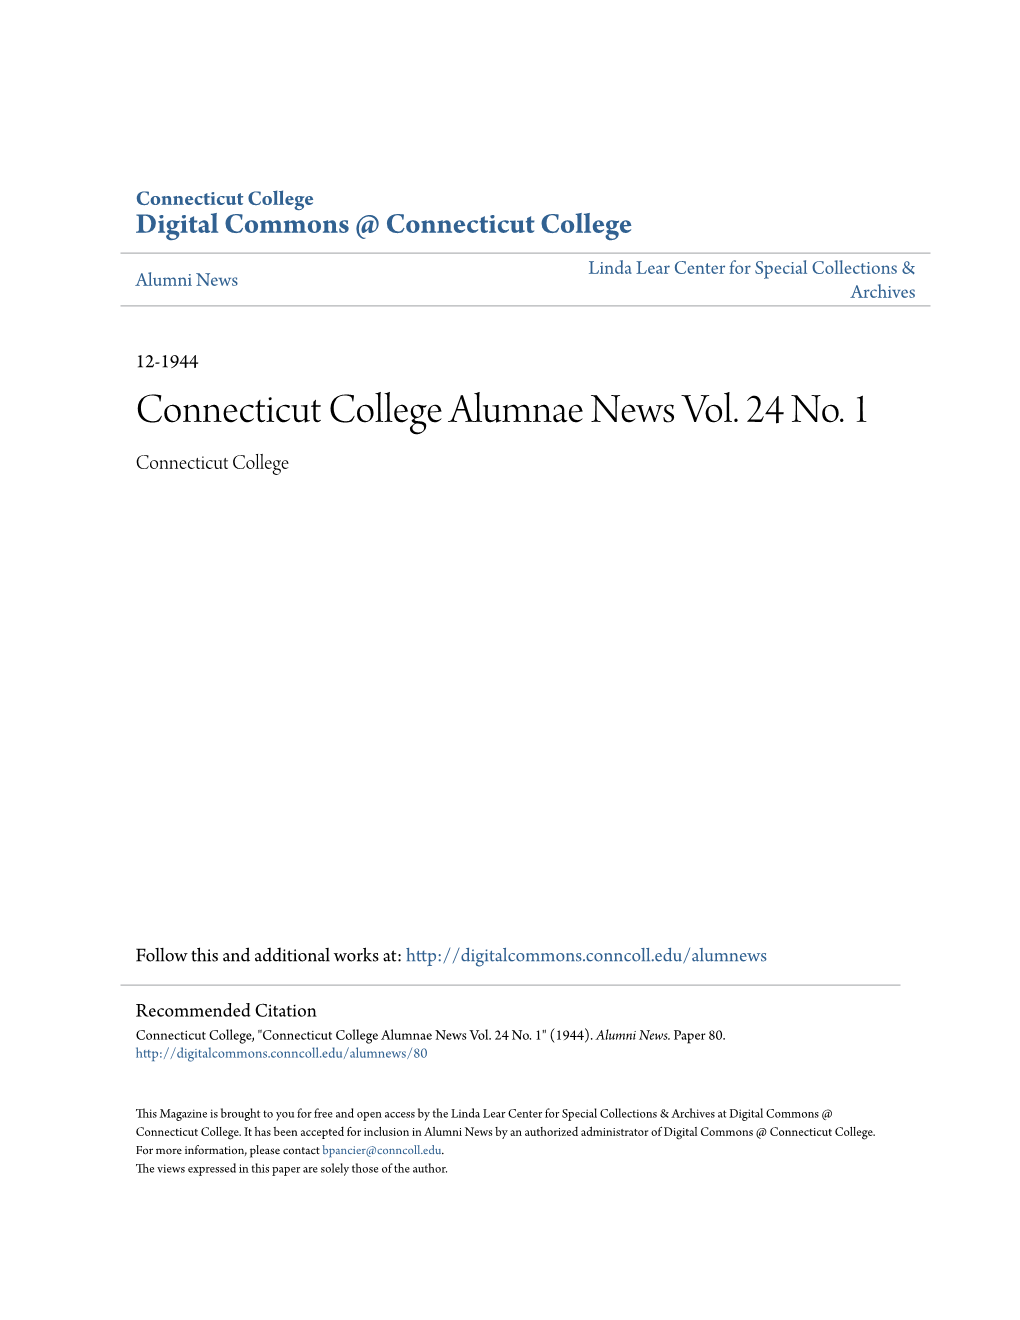 Connecticut College Alumnae News Vol. 24 No. 1 Connecticut College